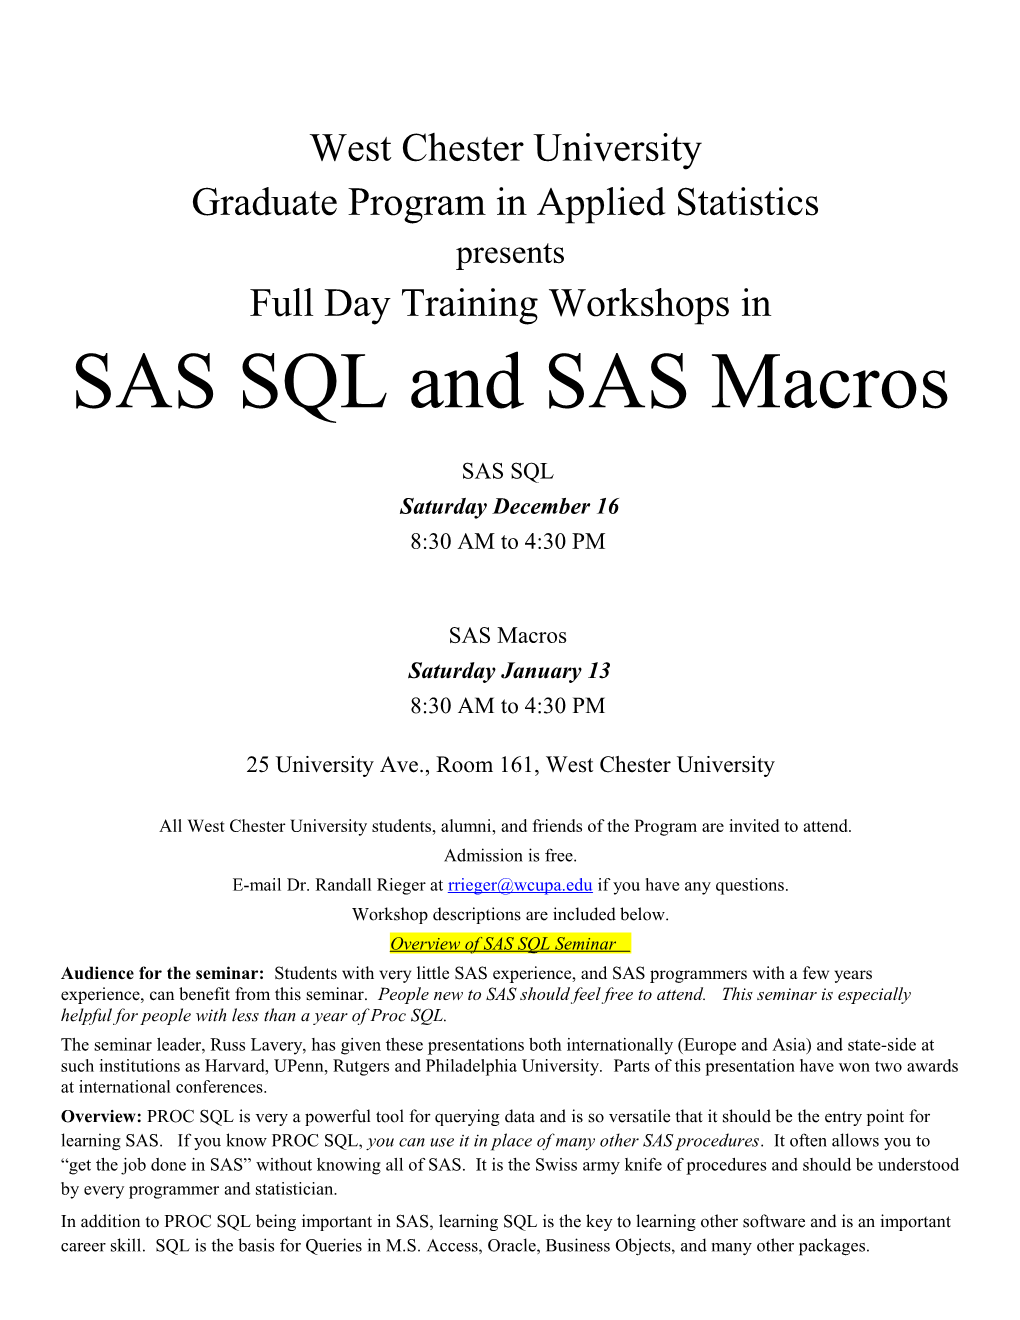 Graduate Program in Applied Statistics